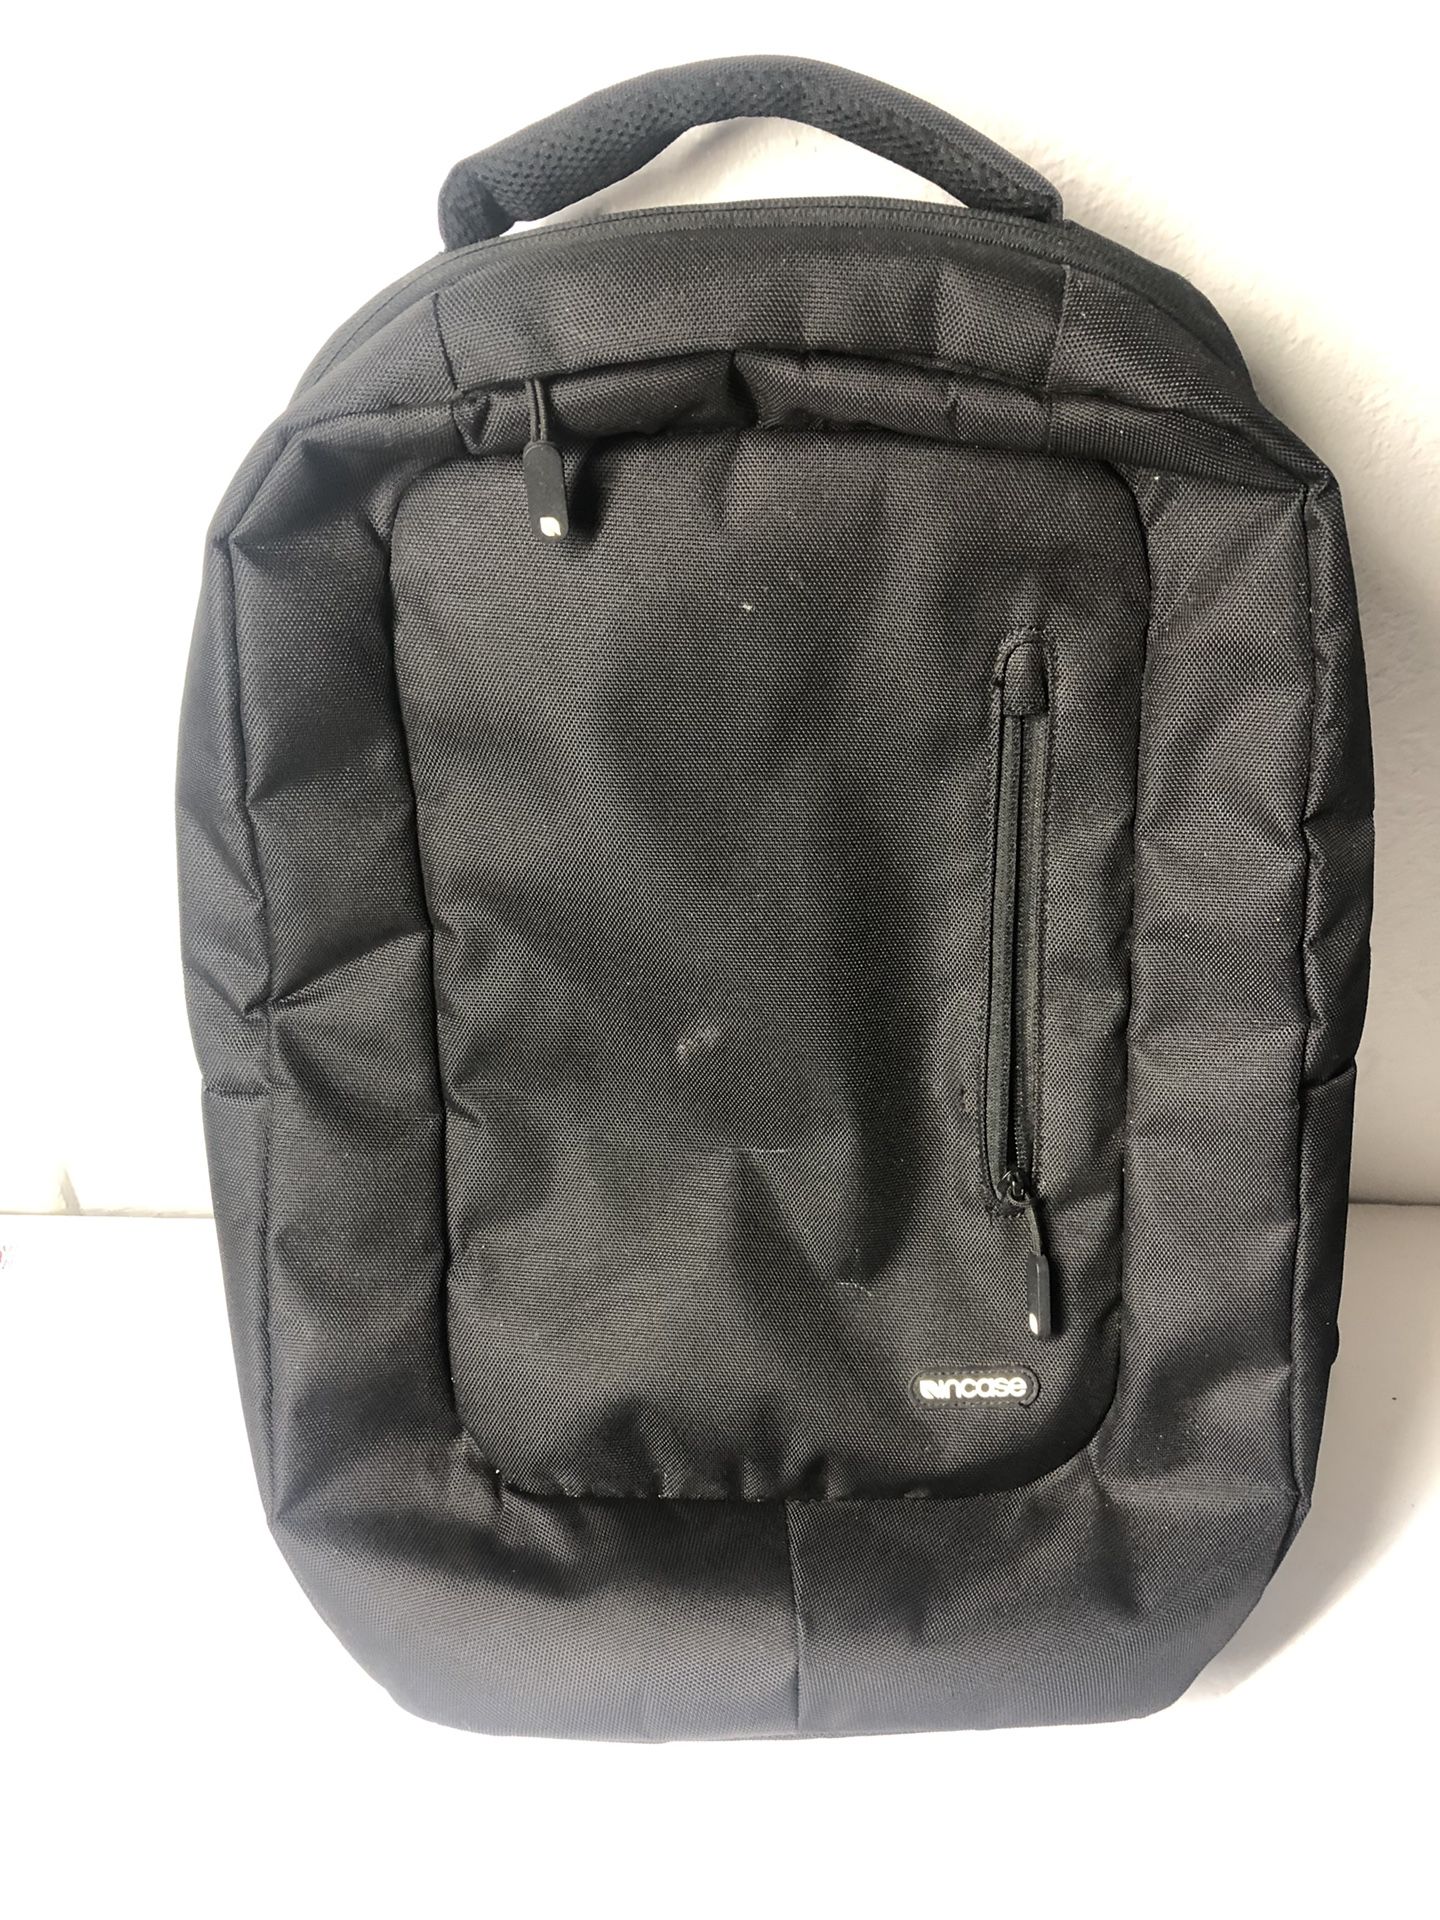 Incase laptop backpack black